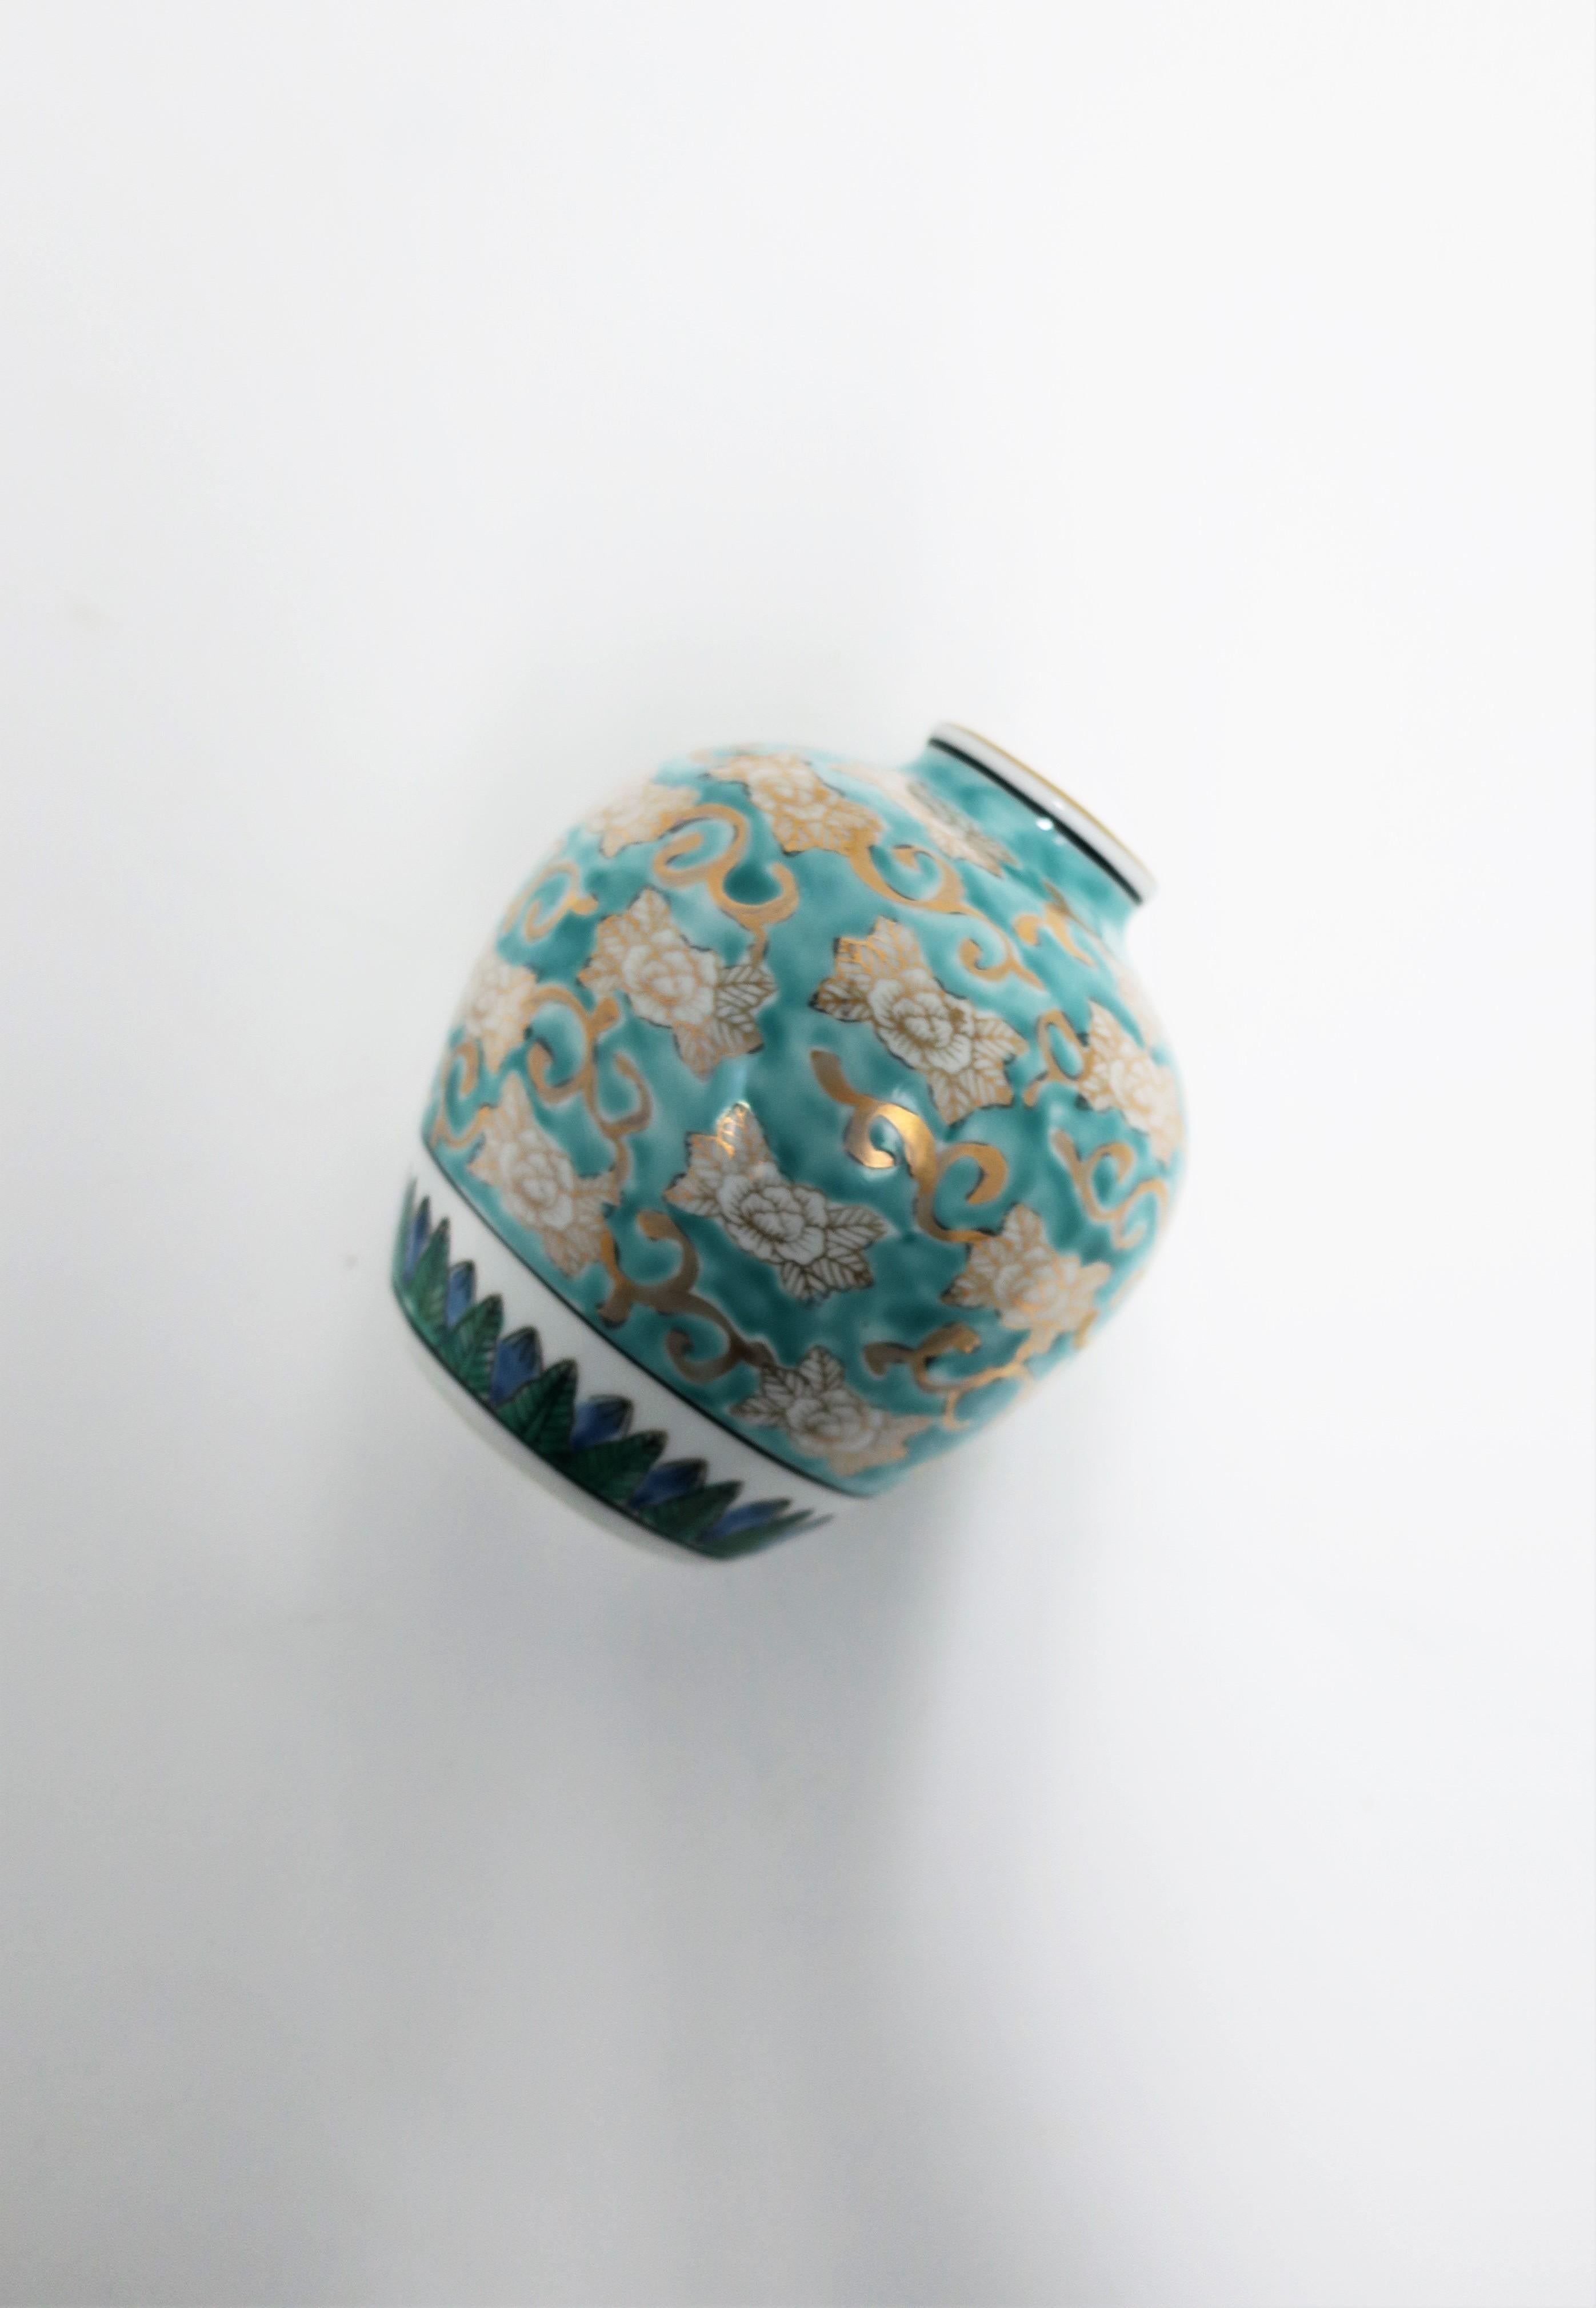 Imari White Blue and Gold Porcelain Urn Ginger Jar Vase, circa 1960s For Sale 1